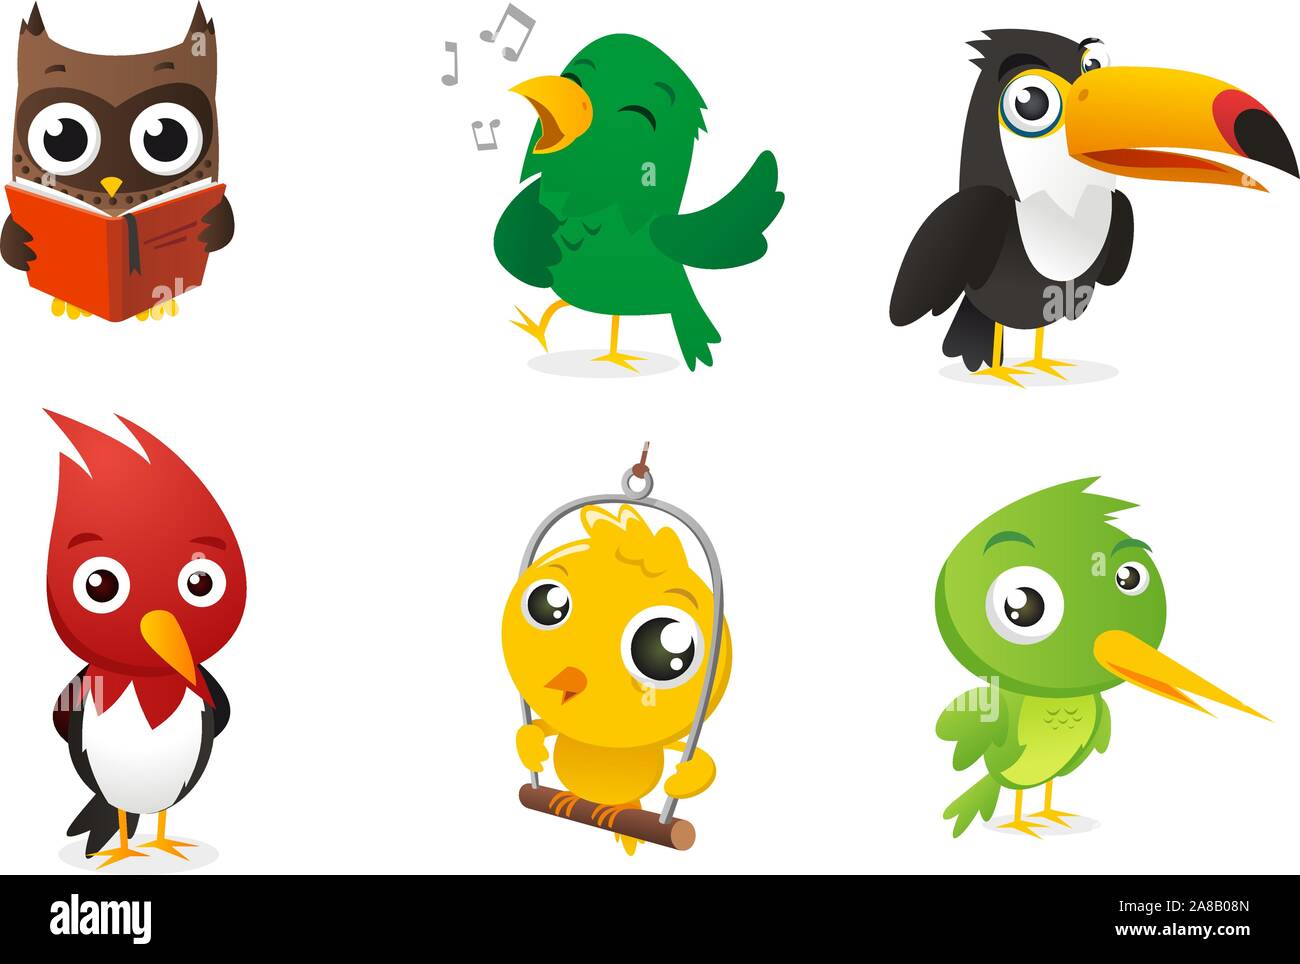 Sechs Cartoon Vollfarbe Vögel set mit Eule, Papagei, Tukan und Specht Vektor-Illustration. Stock Vektor